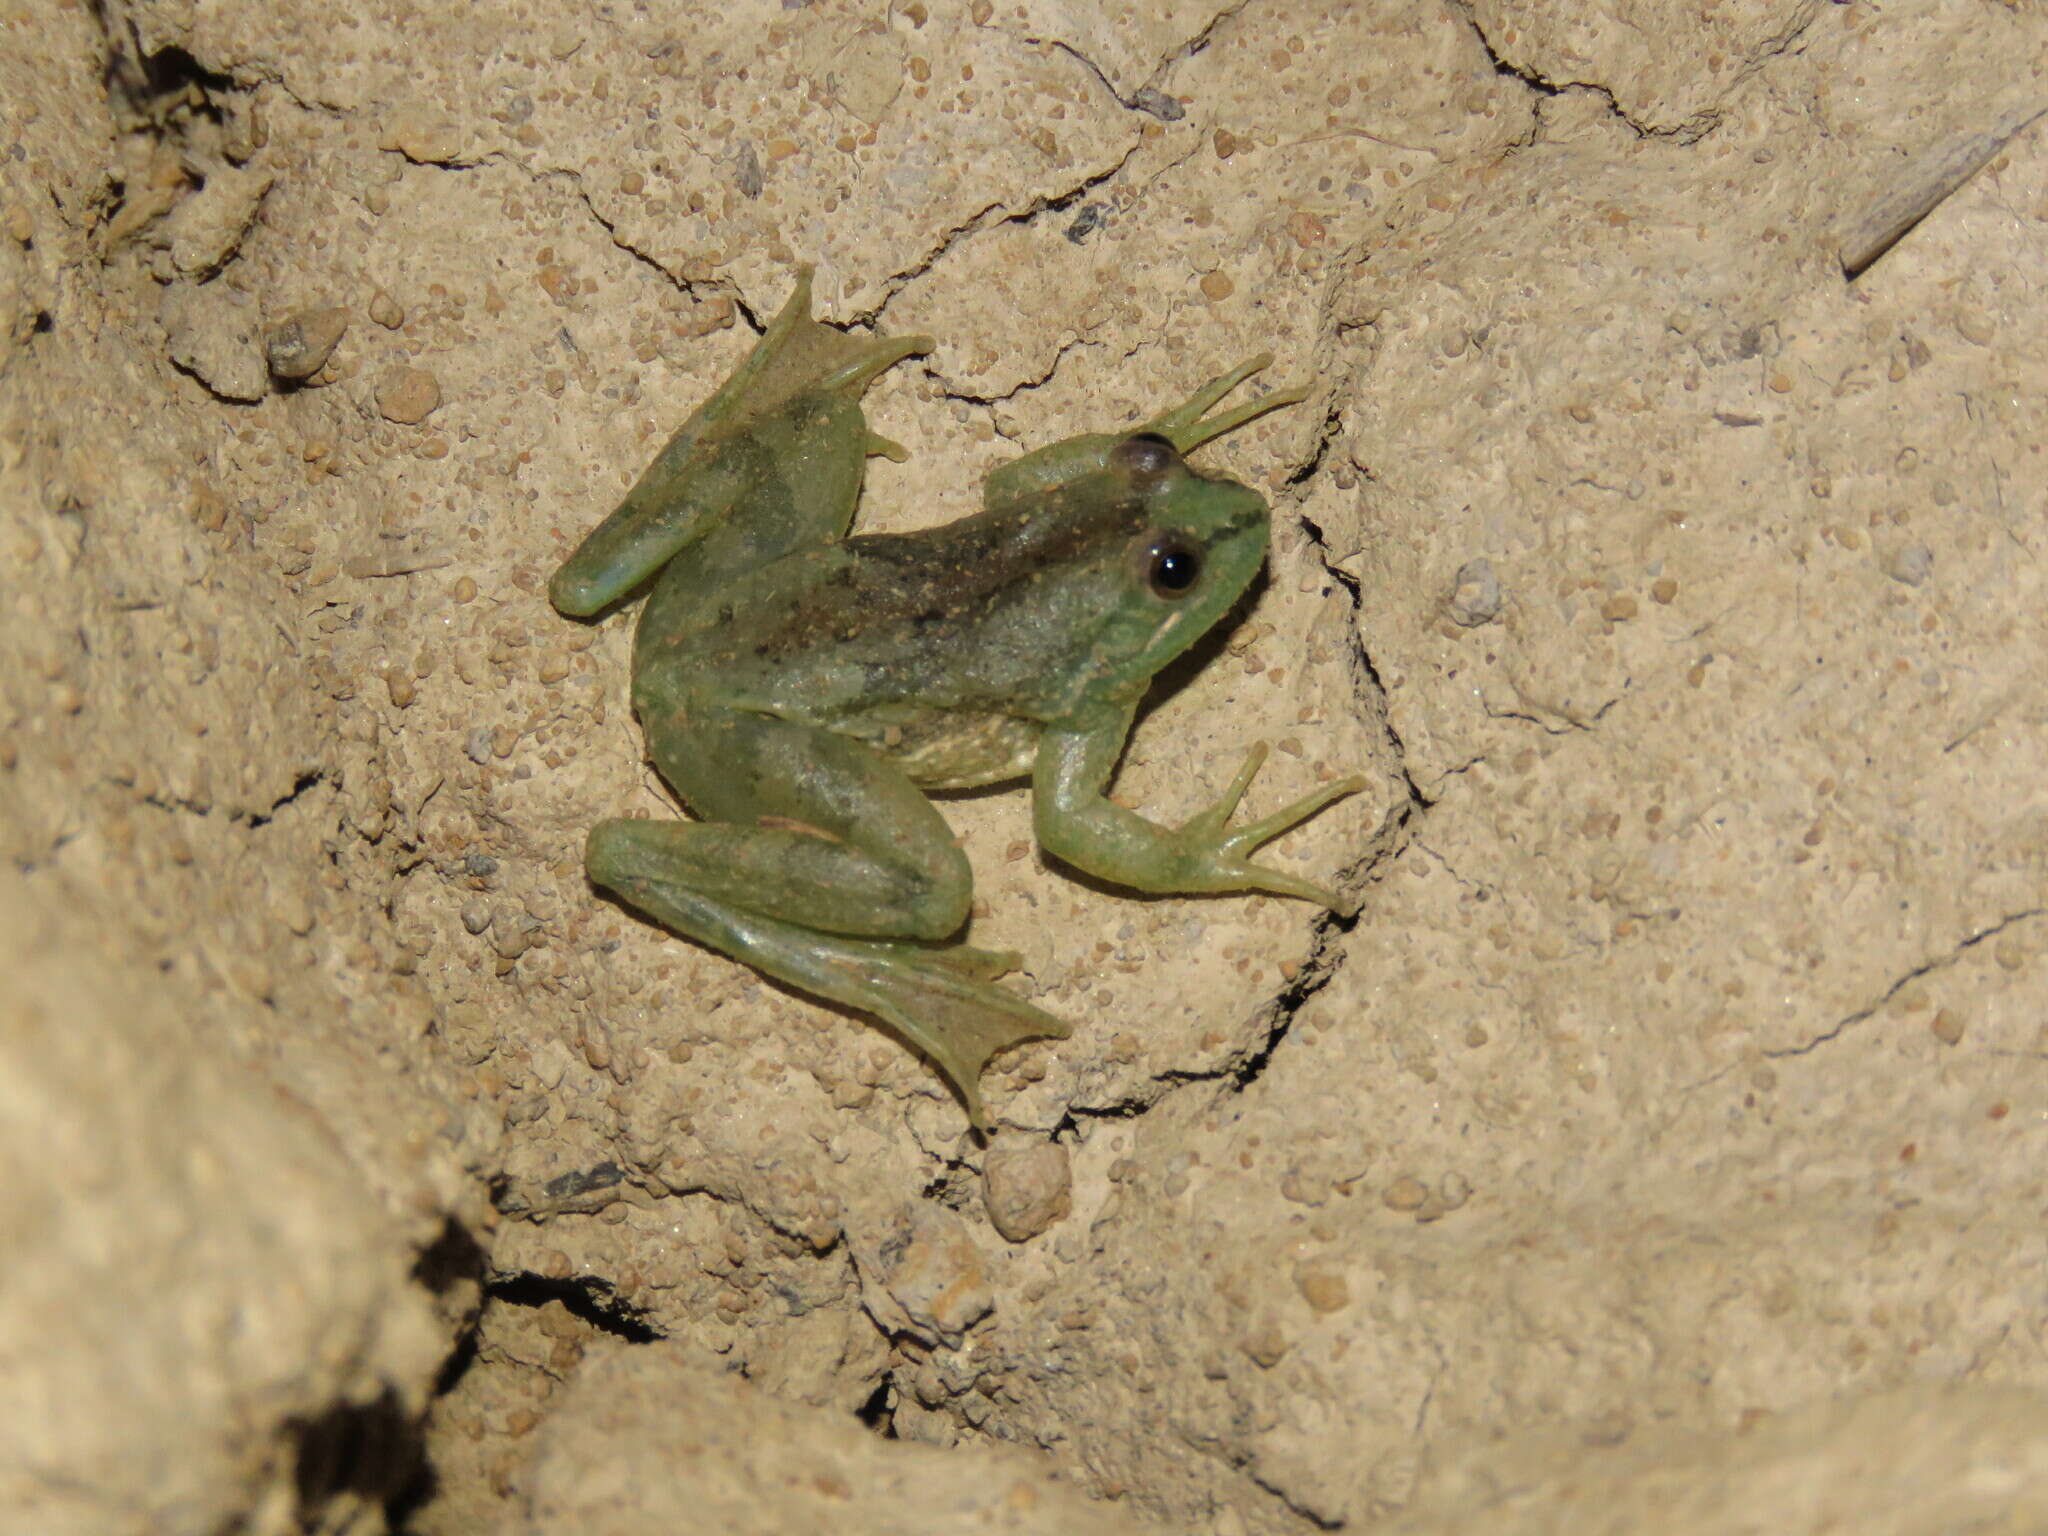 Image of Uruguay Harlequin Frog